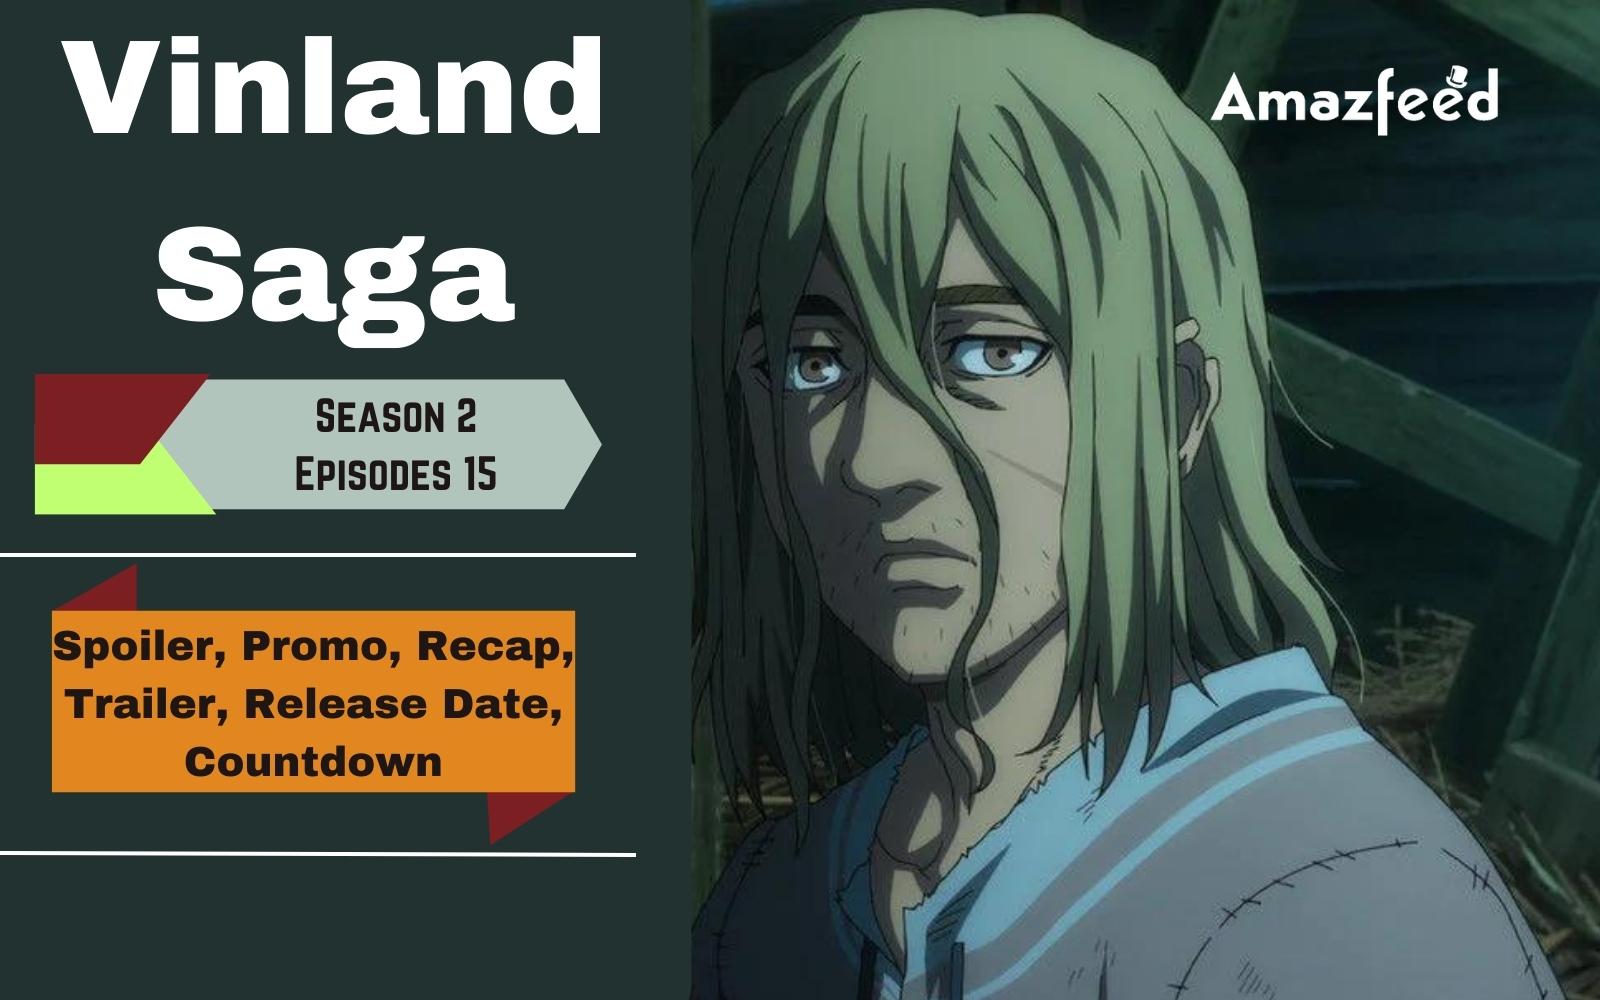 Vinland Saga season 2 episode 13: Release date and time, countdown